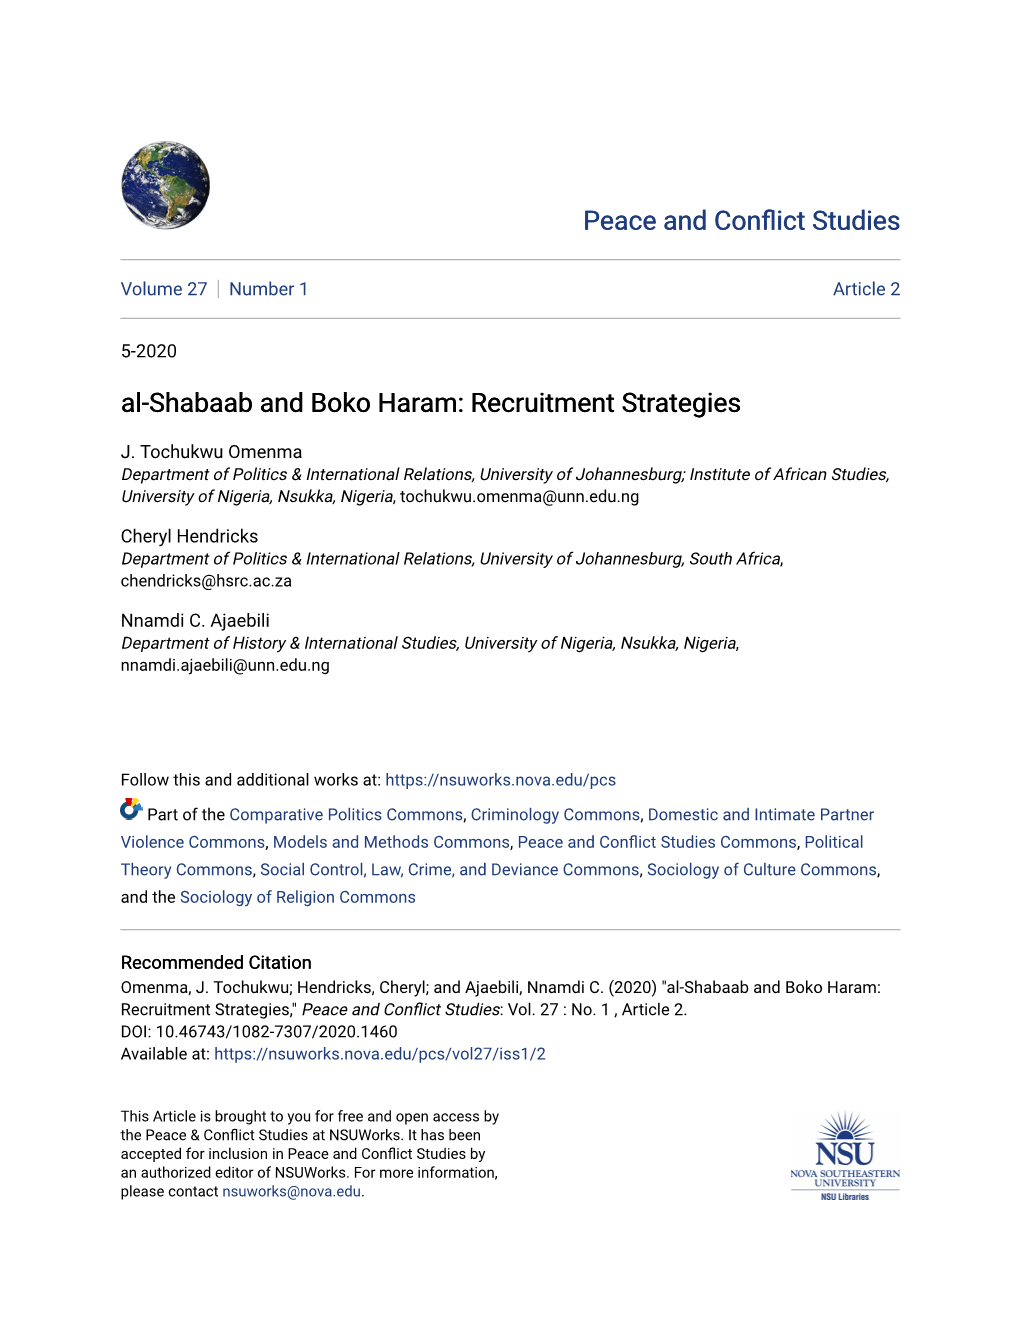 Al-Shabaab and Boko Haram: Recruitment Strategies